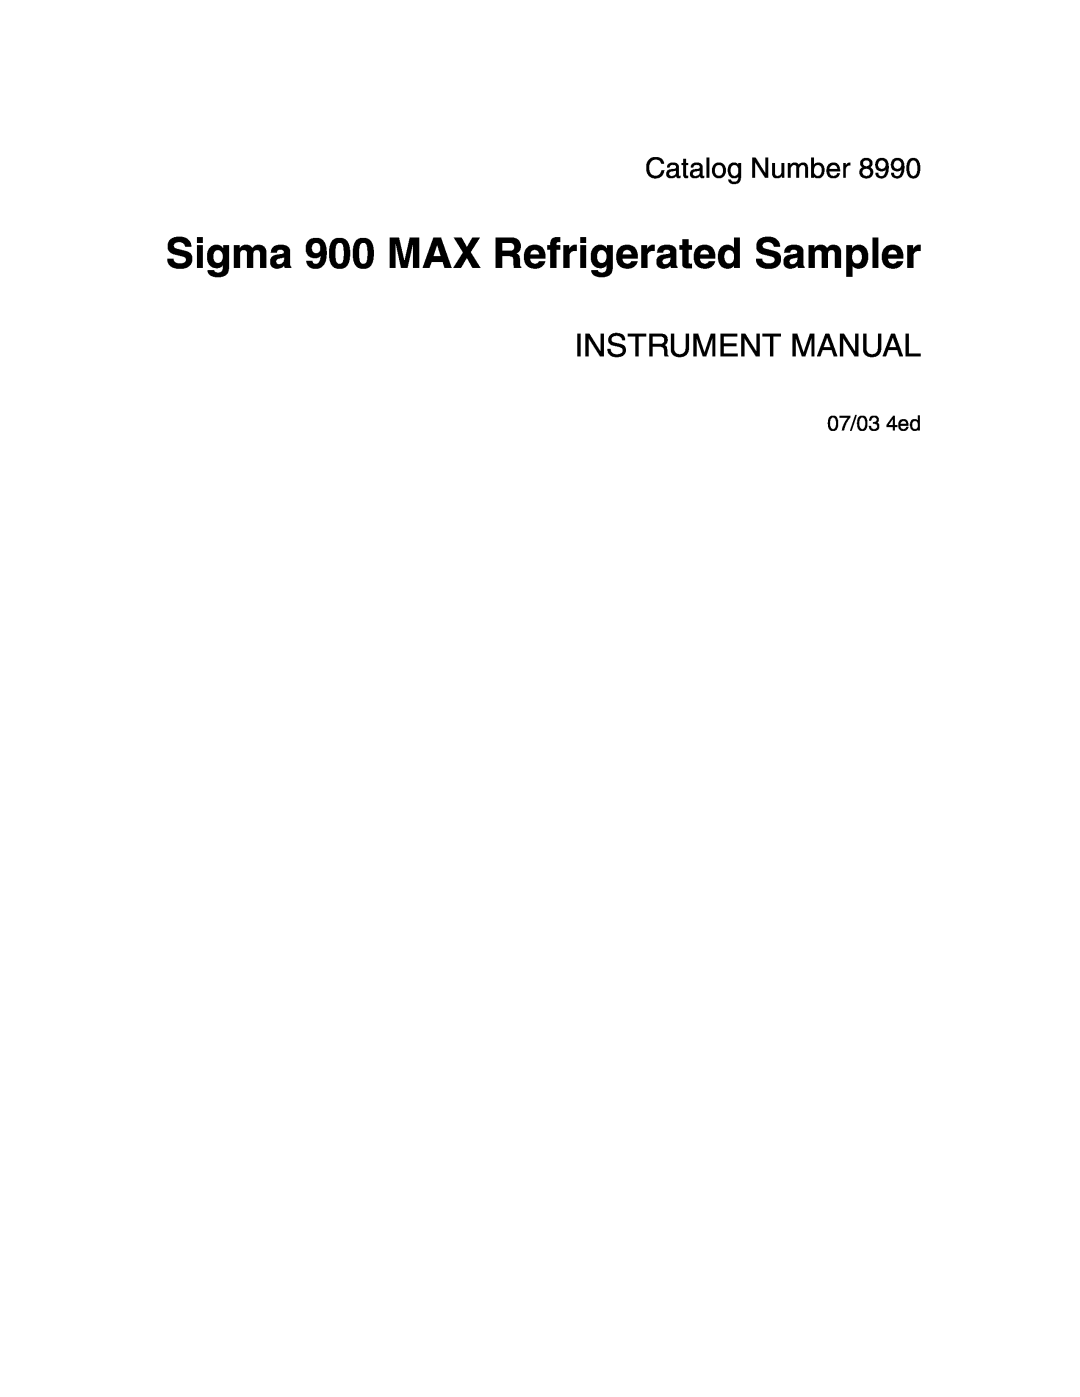 Hach manual Catalog Number, 07/03 4ed, Sigma 900 MAX Refrigerated Sampler, Instrument Manual 